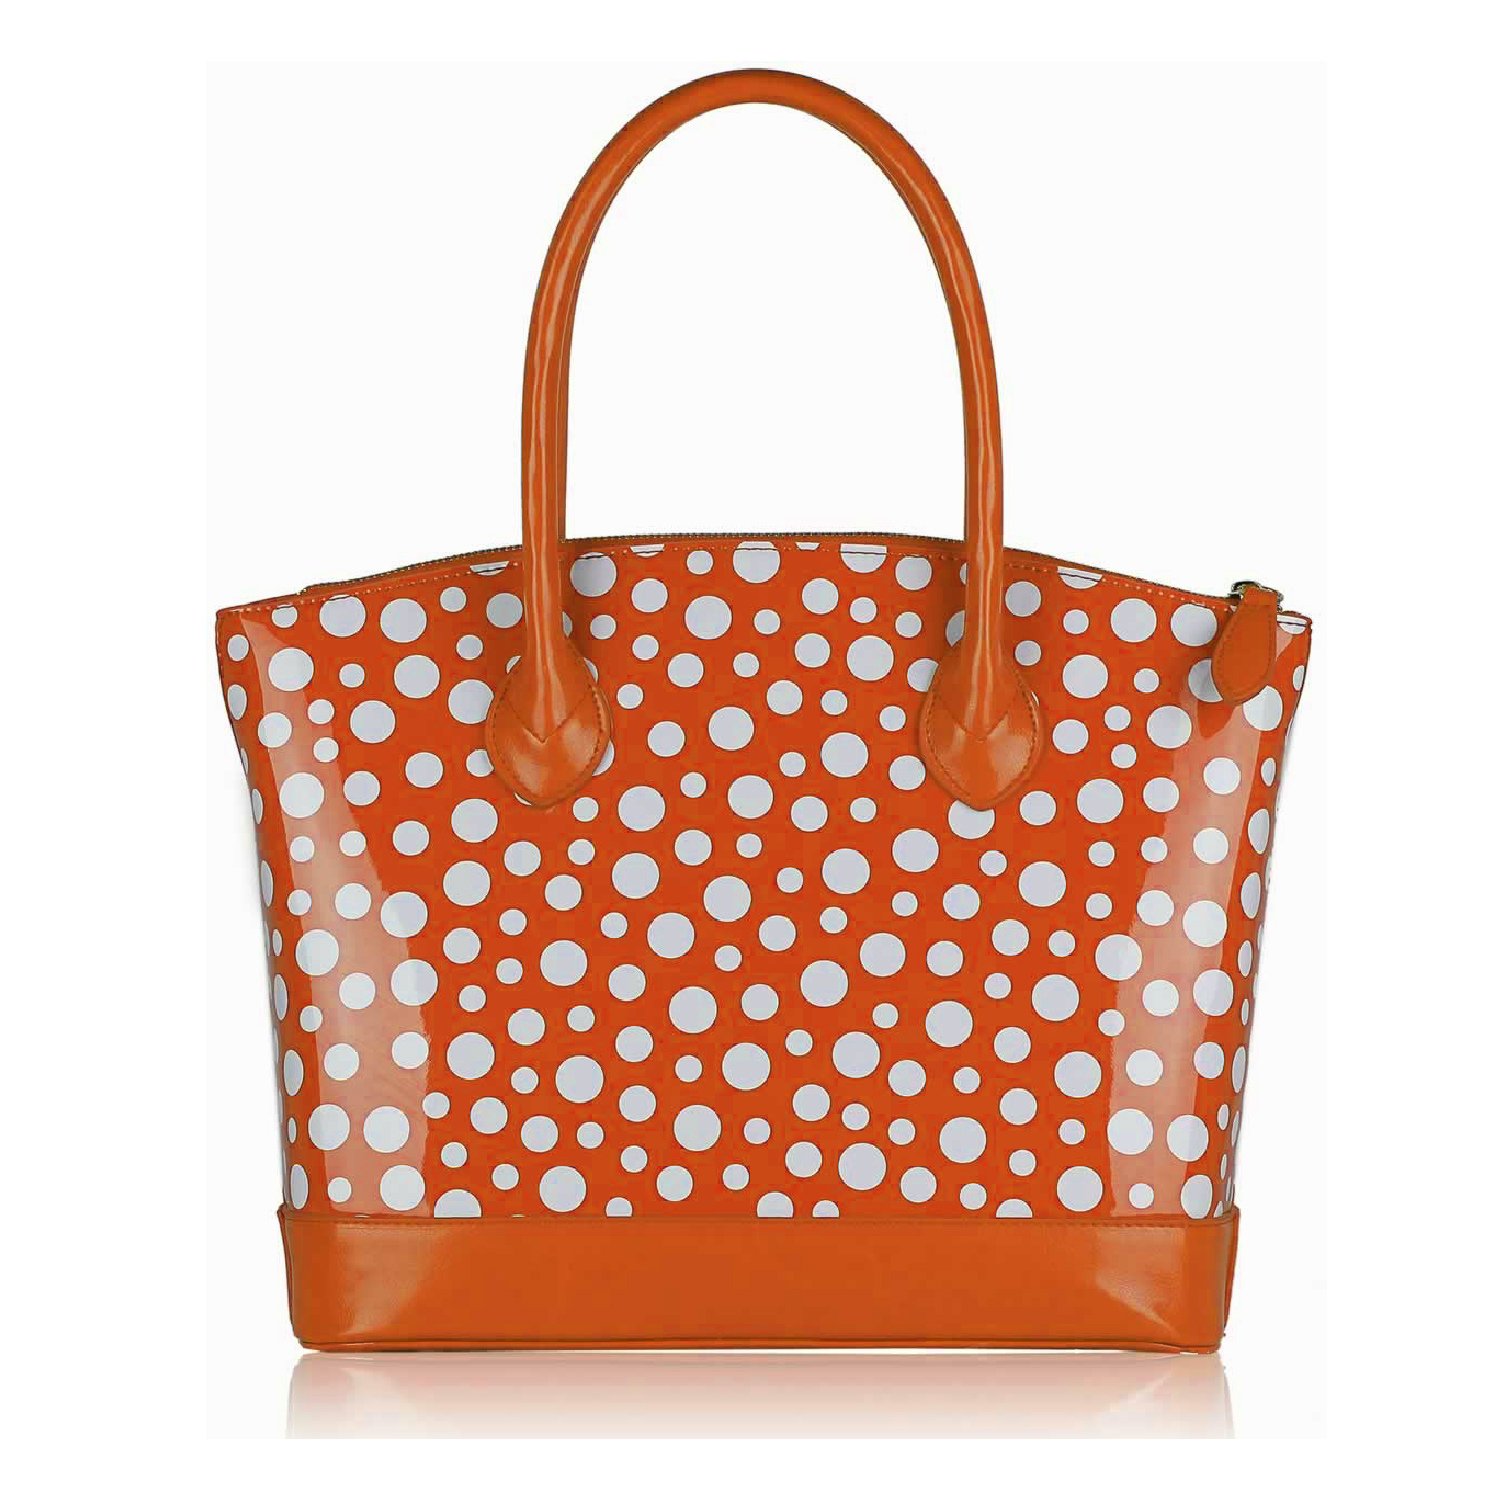 wholesale bags uk Wholesale & B2B Orange Patent Polka Dot Tote Bag ...